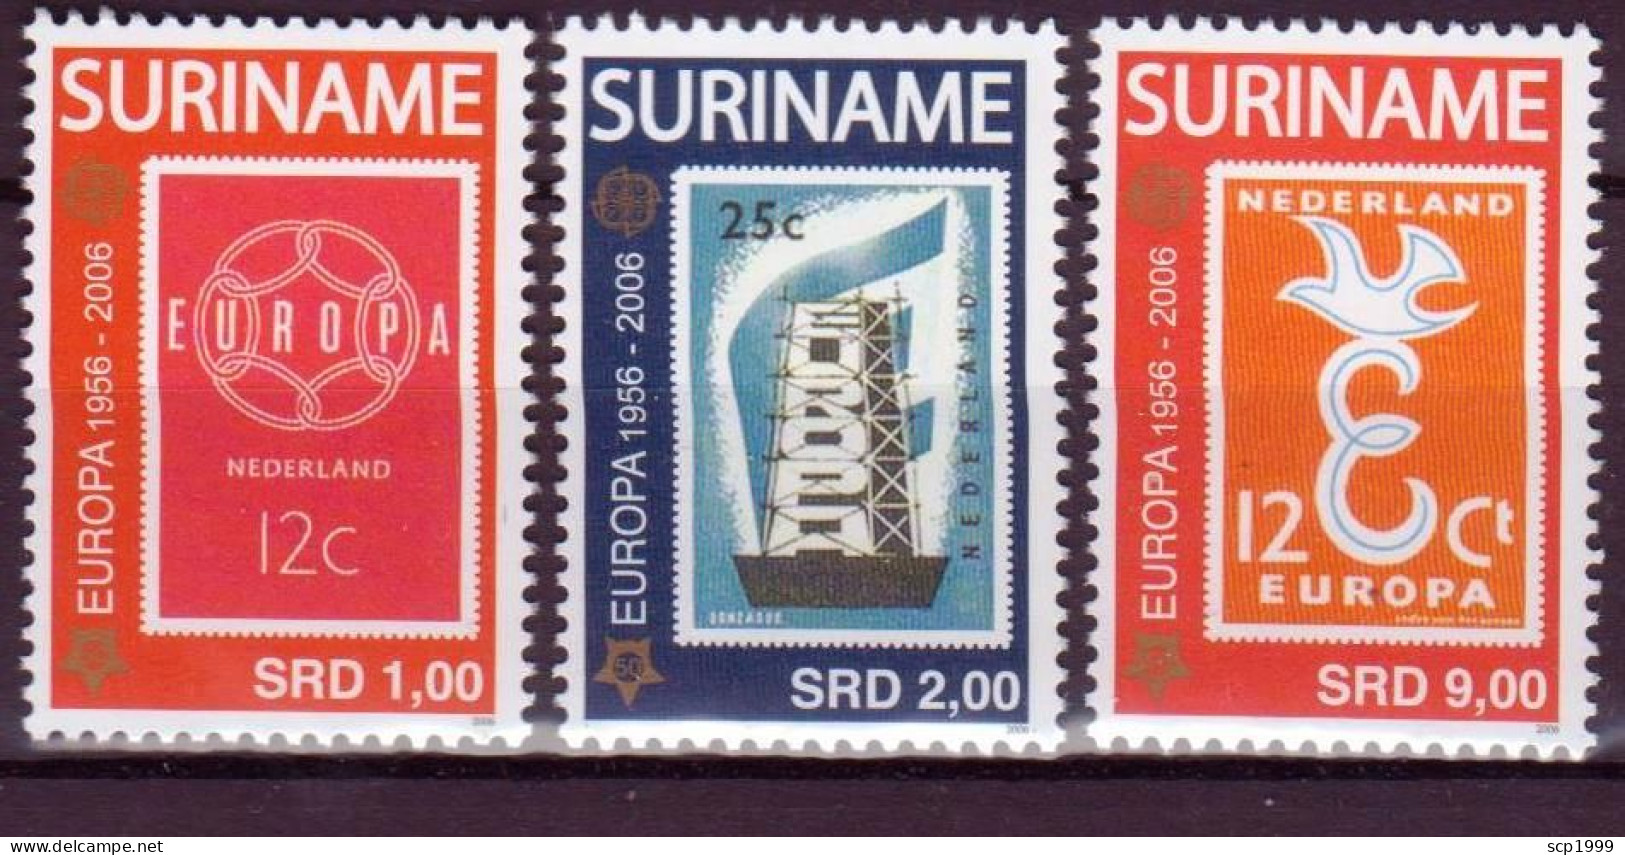 Suriname 2006 - Europa 50 Years Stamps Set MNH - Surinam